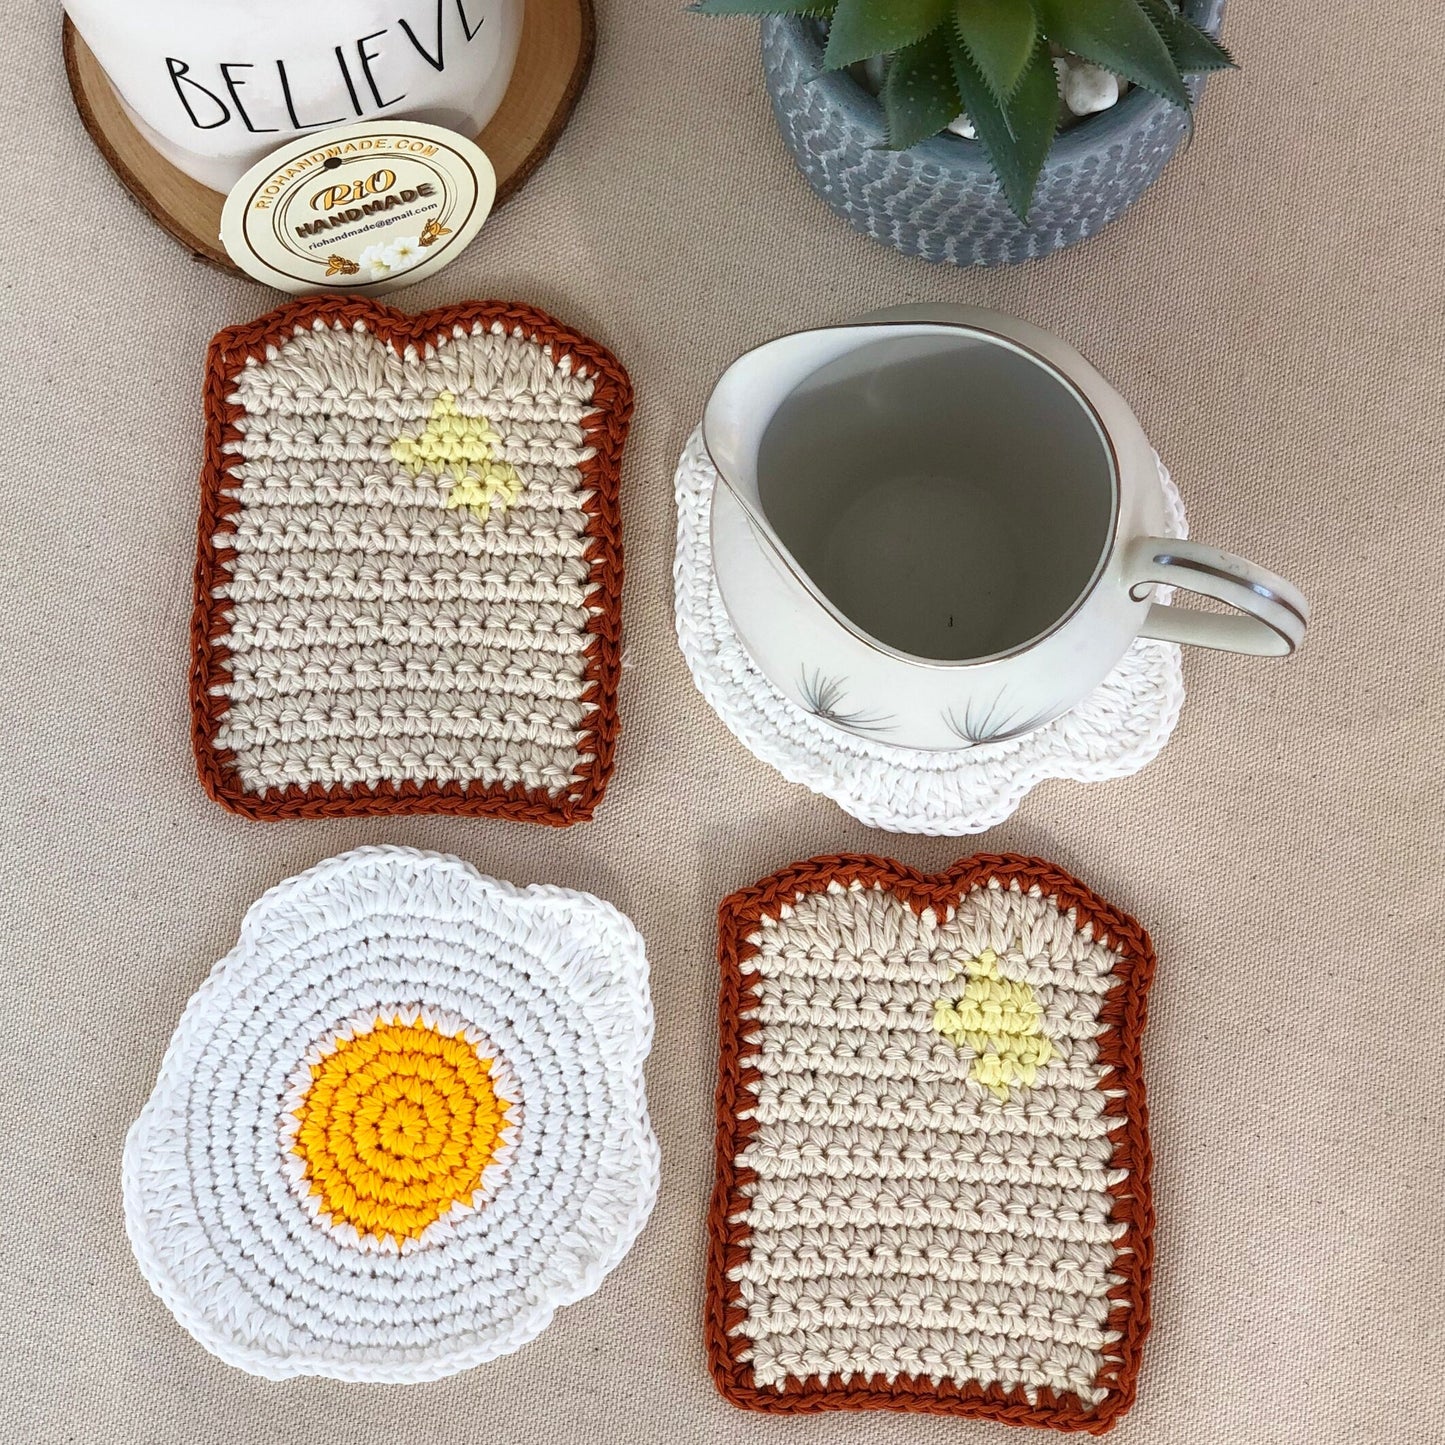 Handmade Crochet Amigurumi Coaster, Fried Eggs and Toast Coaster Set, Crochet Coaster, Housewarming Gift, Home Decor